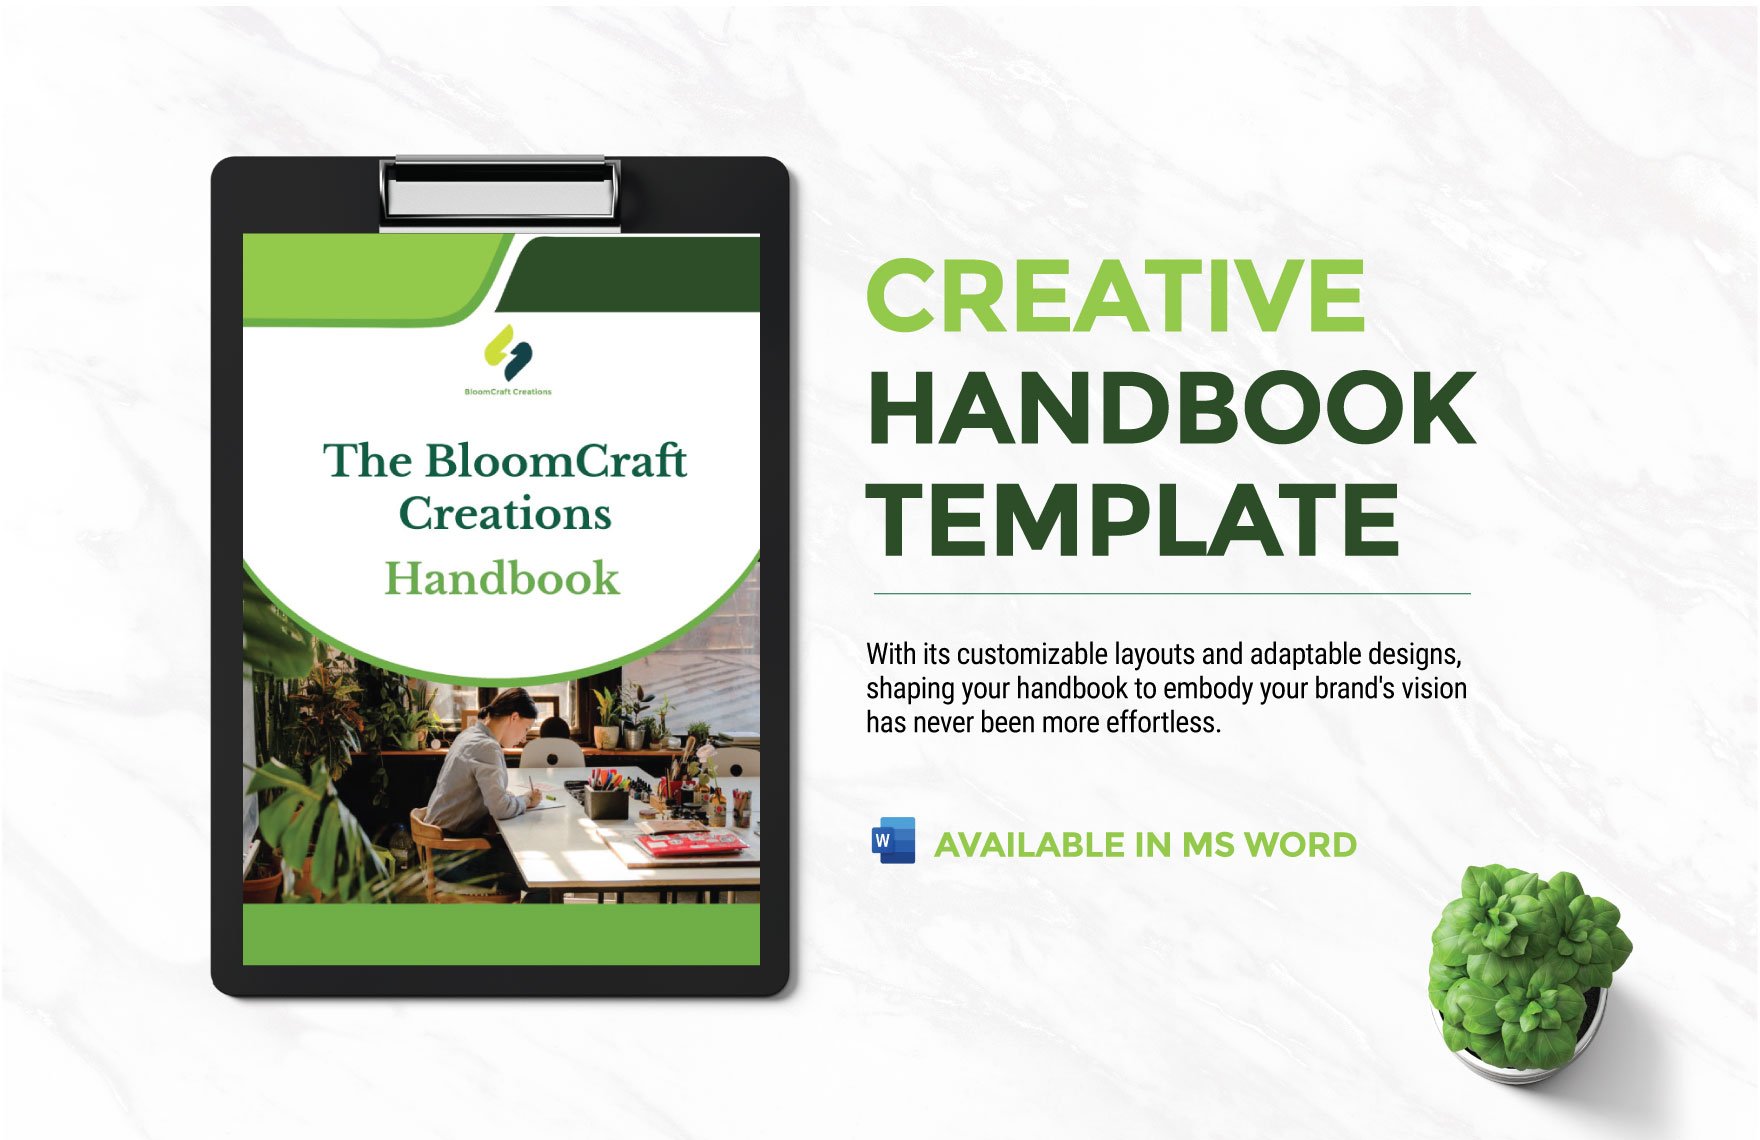 Creative Handbook Template